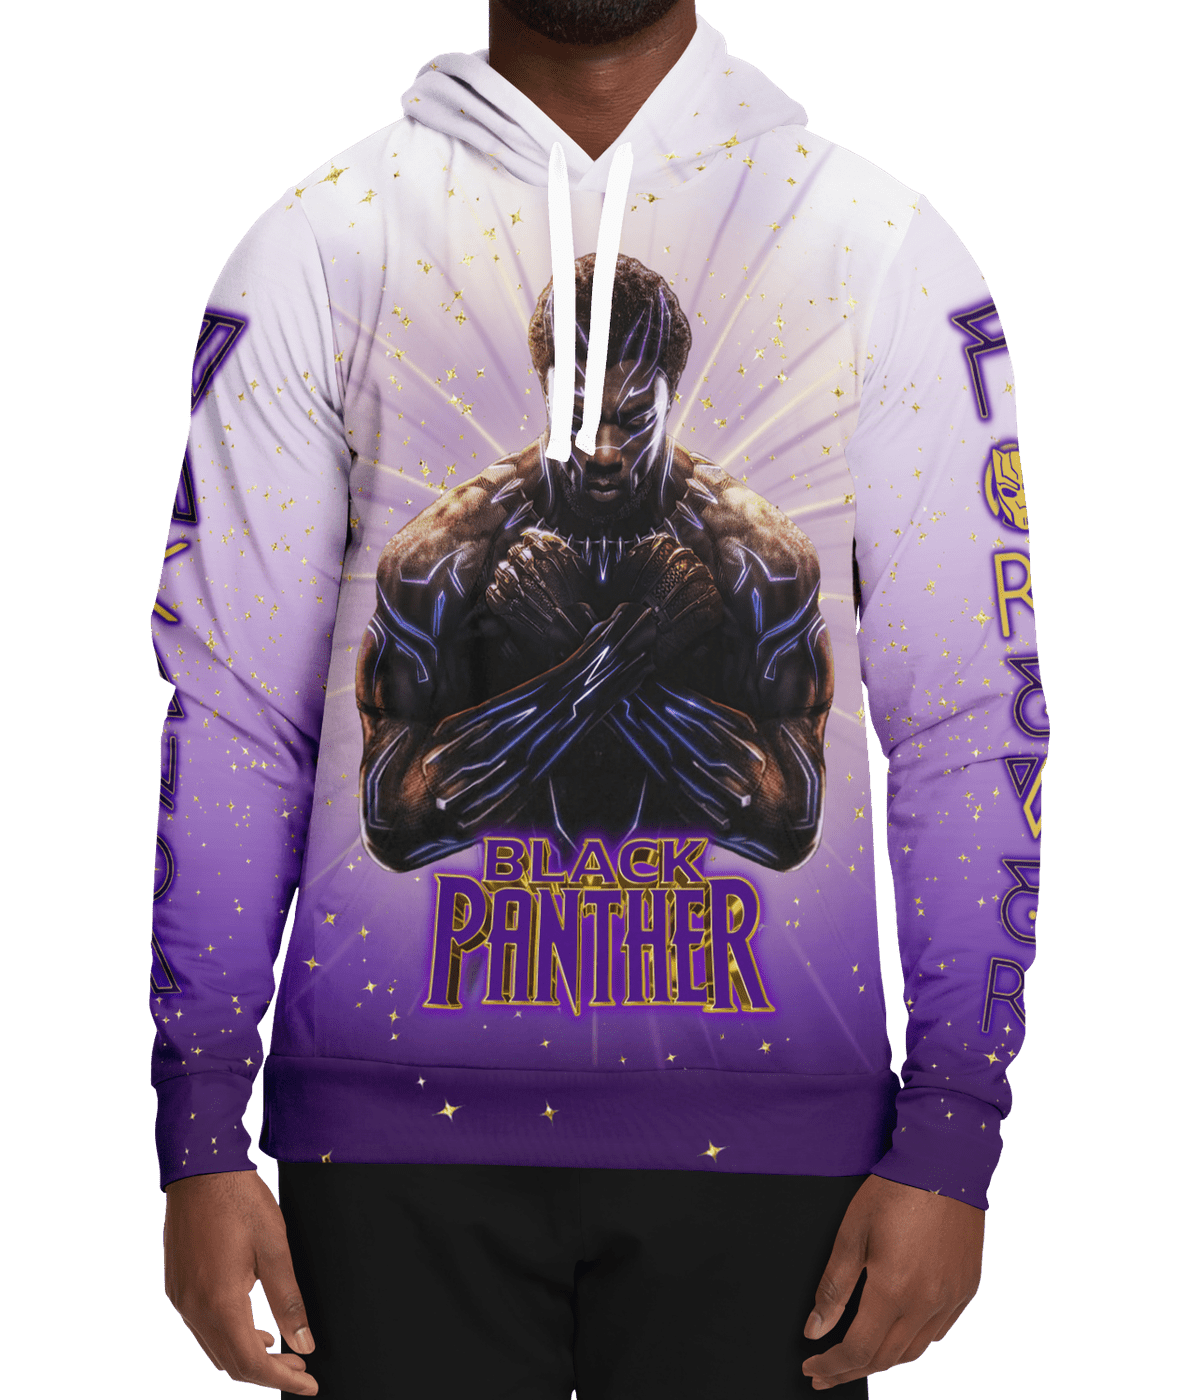 Wakanda Forever / Black Panther Tribute Hoodie